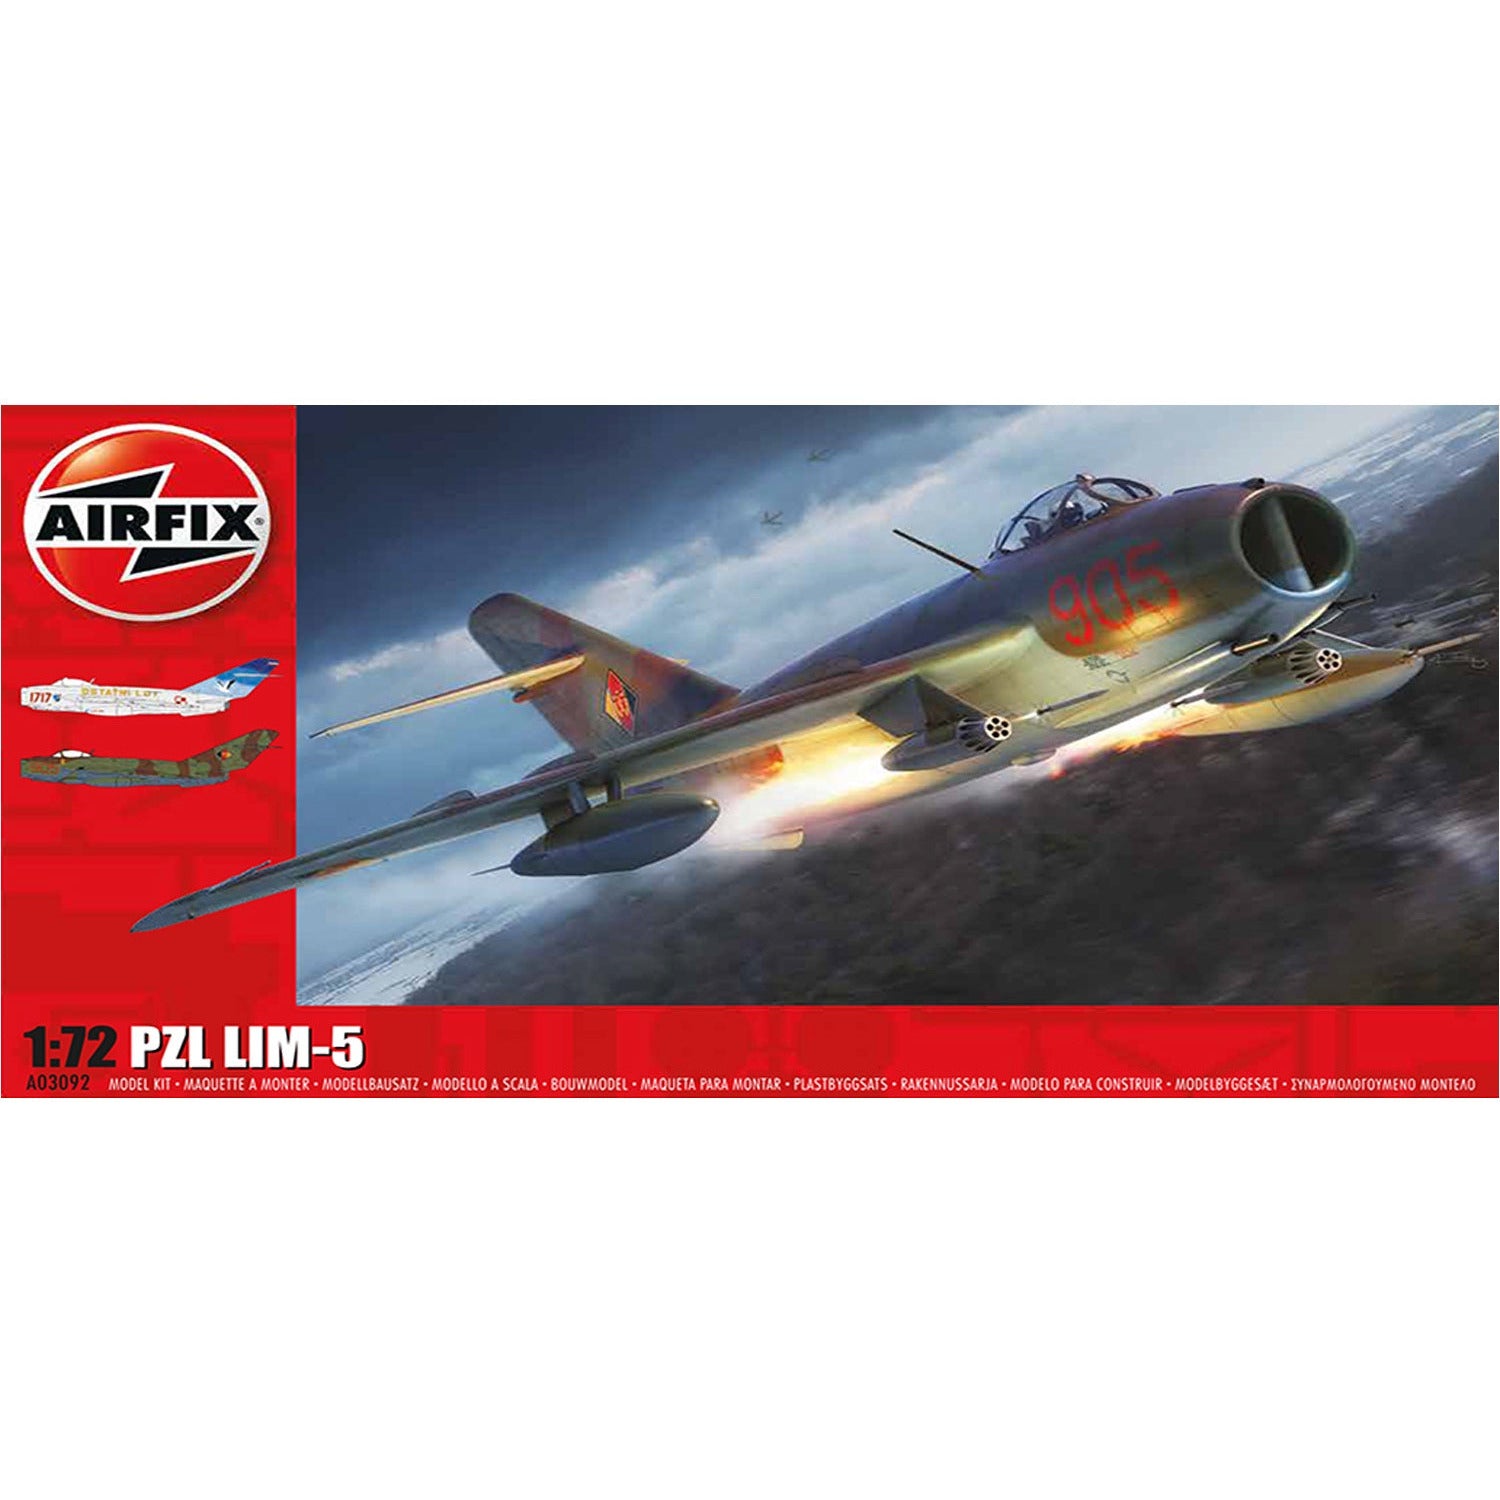 PZL LIM-5 1/72 #03092 by Airfix